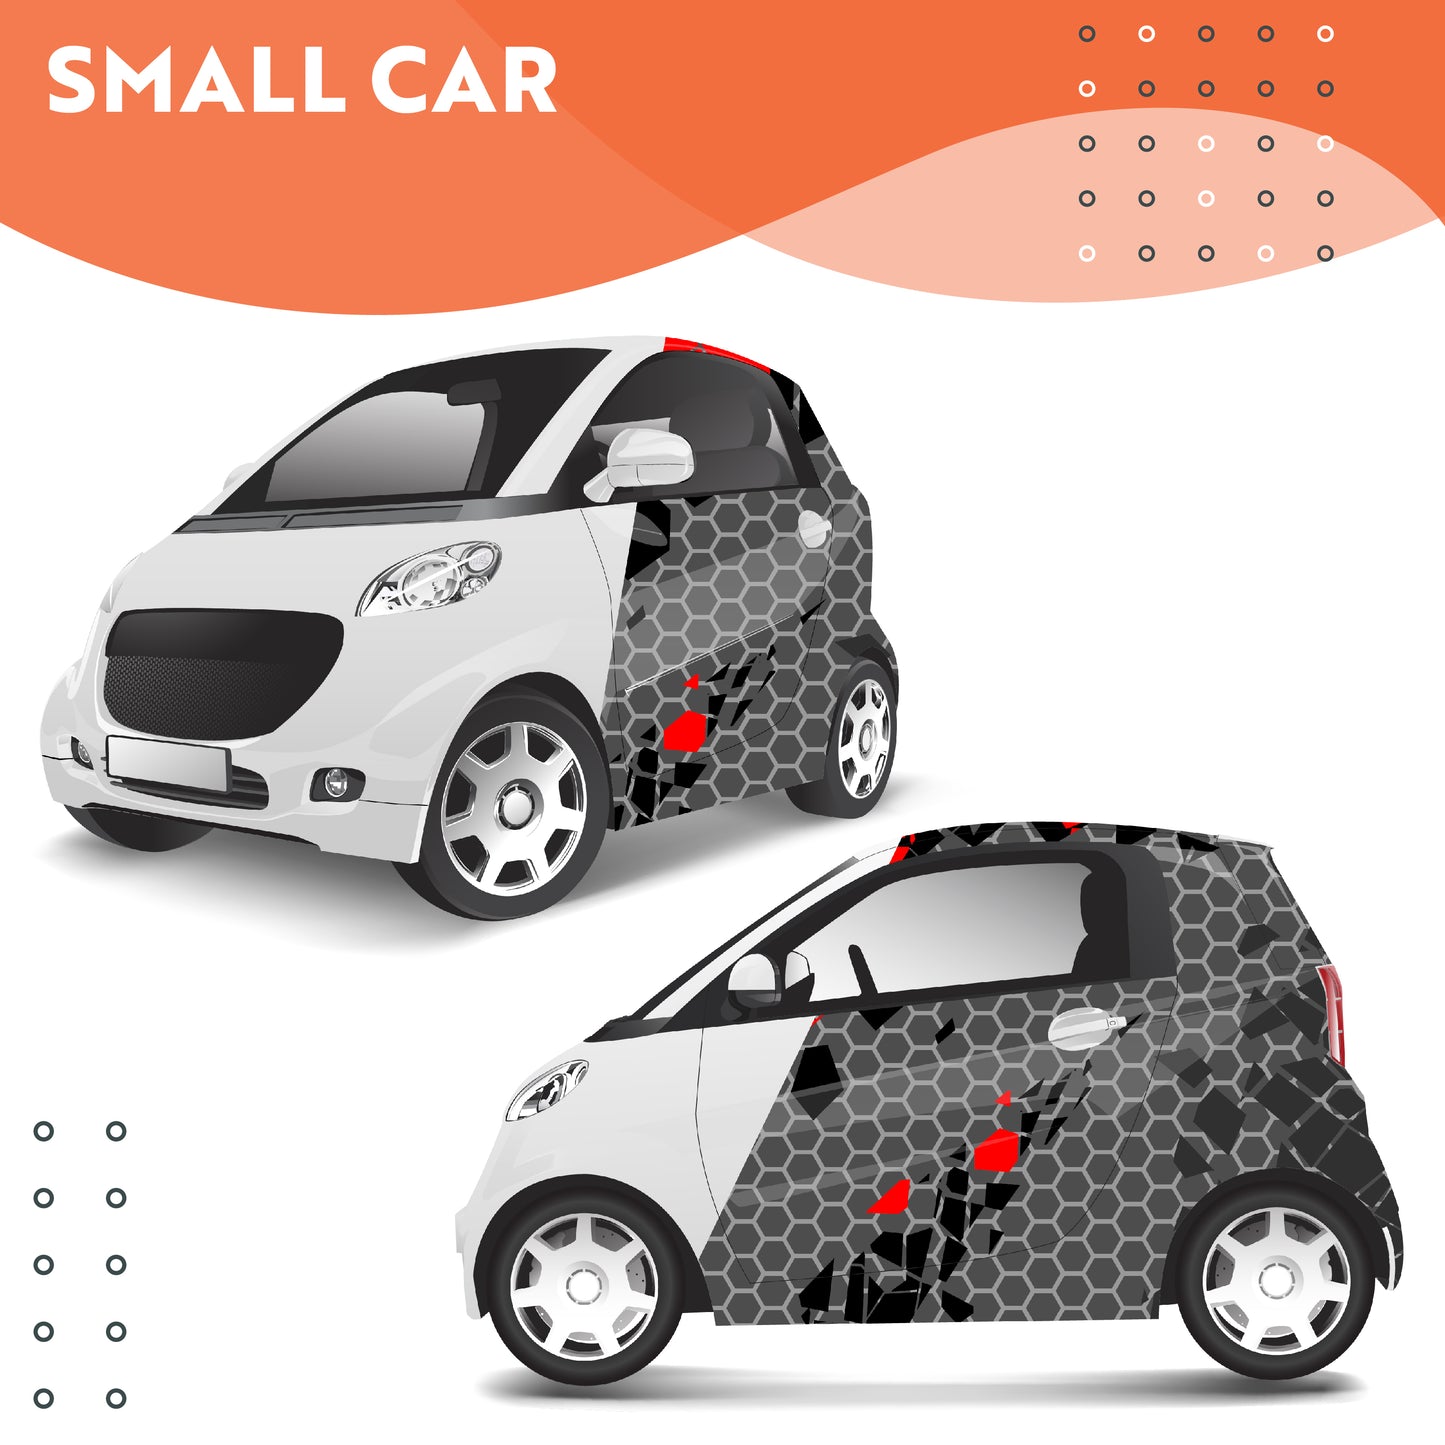 Small Car (Smart)